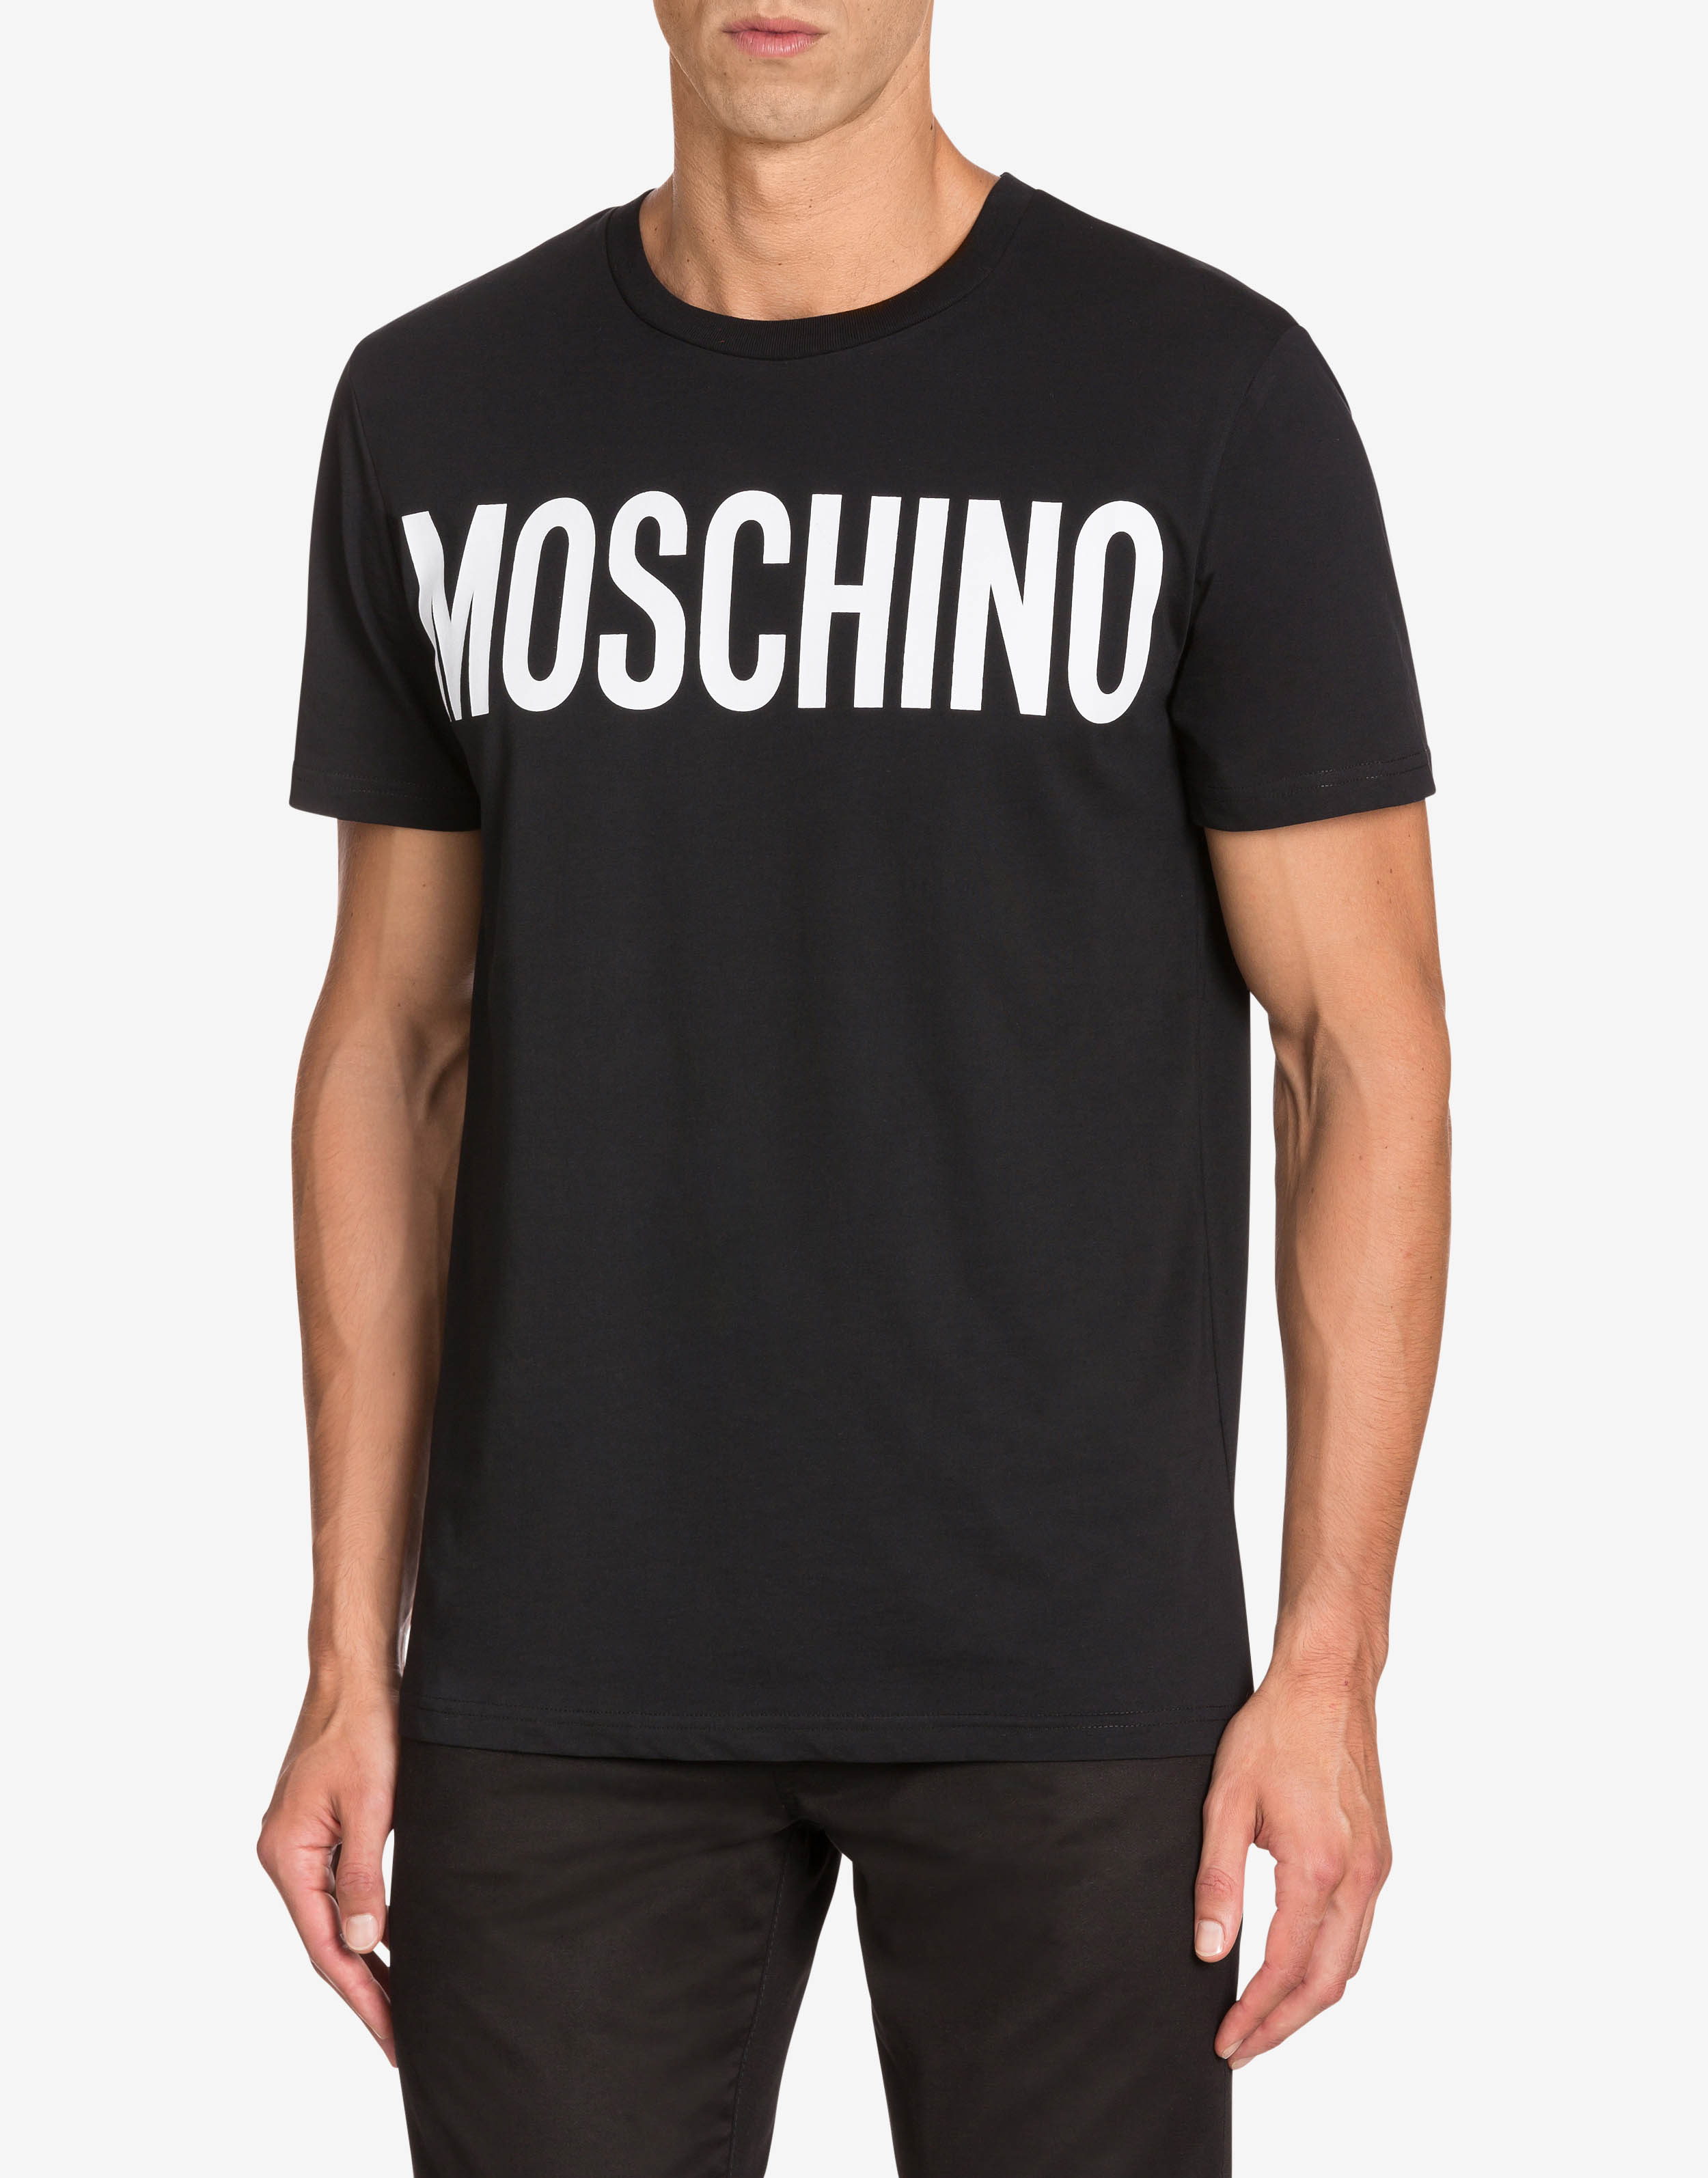 Moschino Men  Official Moschino® Store